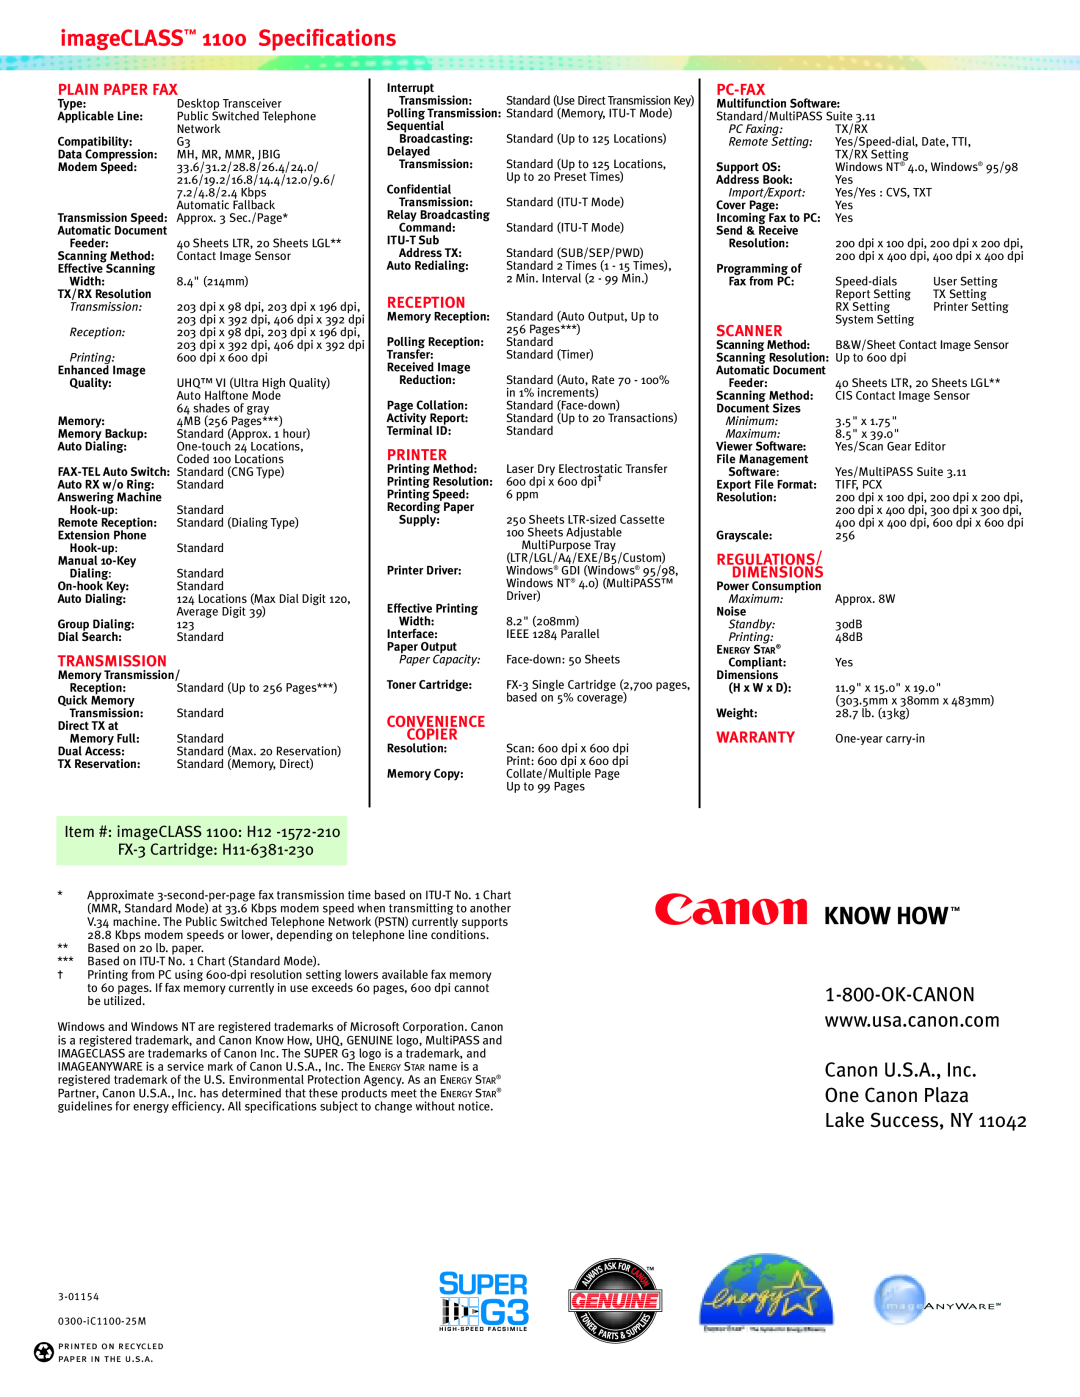 Canon warranty imageCLASS 1100 Specifications, Canon U.S.A., Inc One Canon Plaza Lake Success, NY 